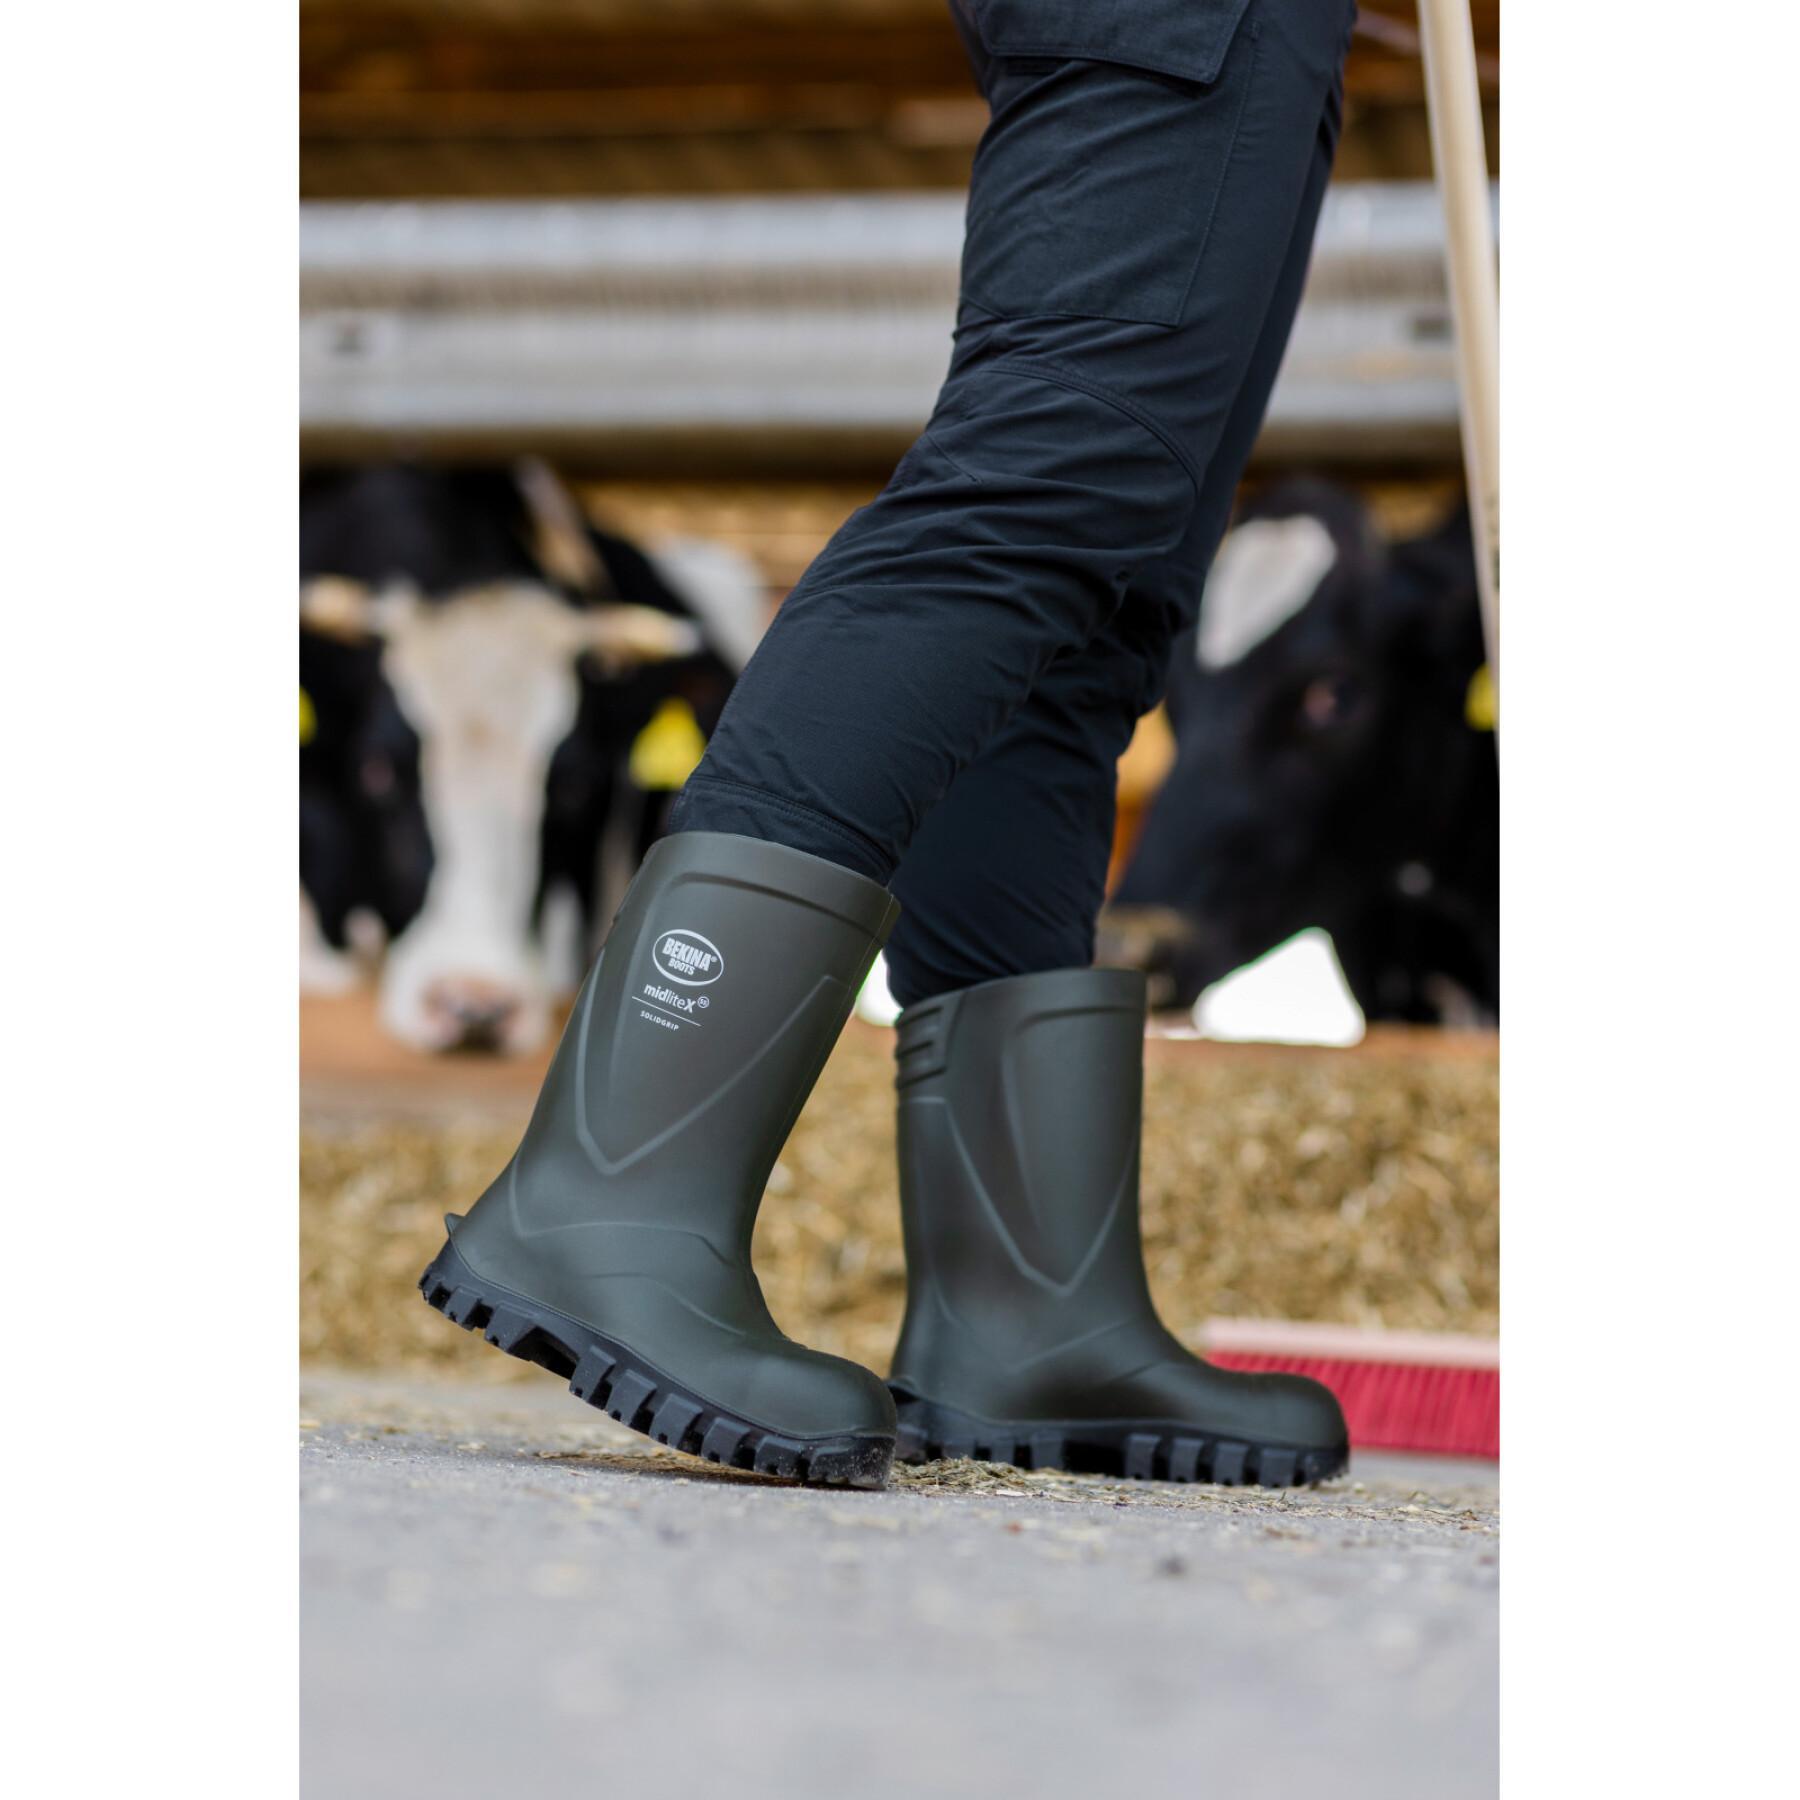 Safety boots Bekina S5 MidliteX Solidgrip